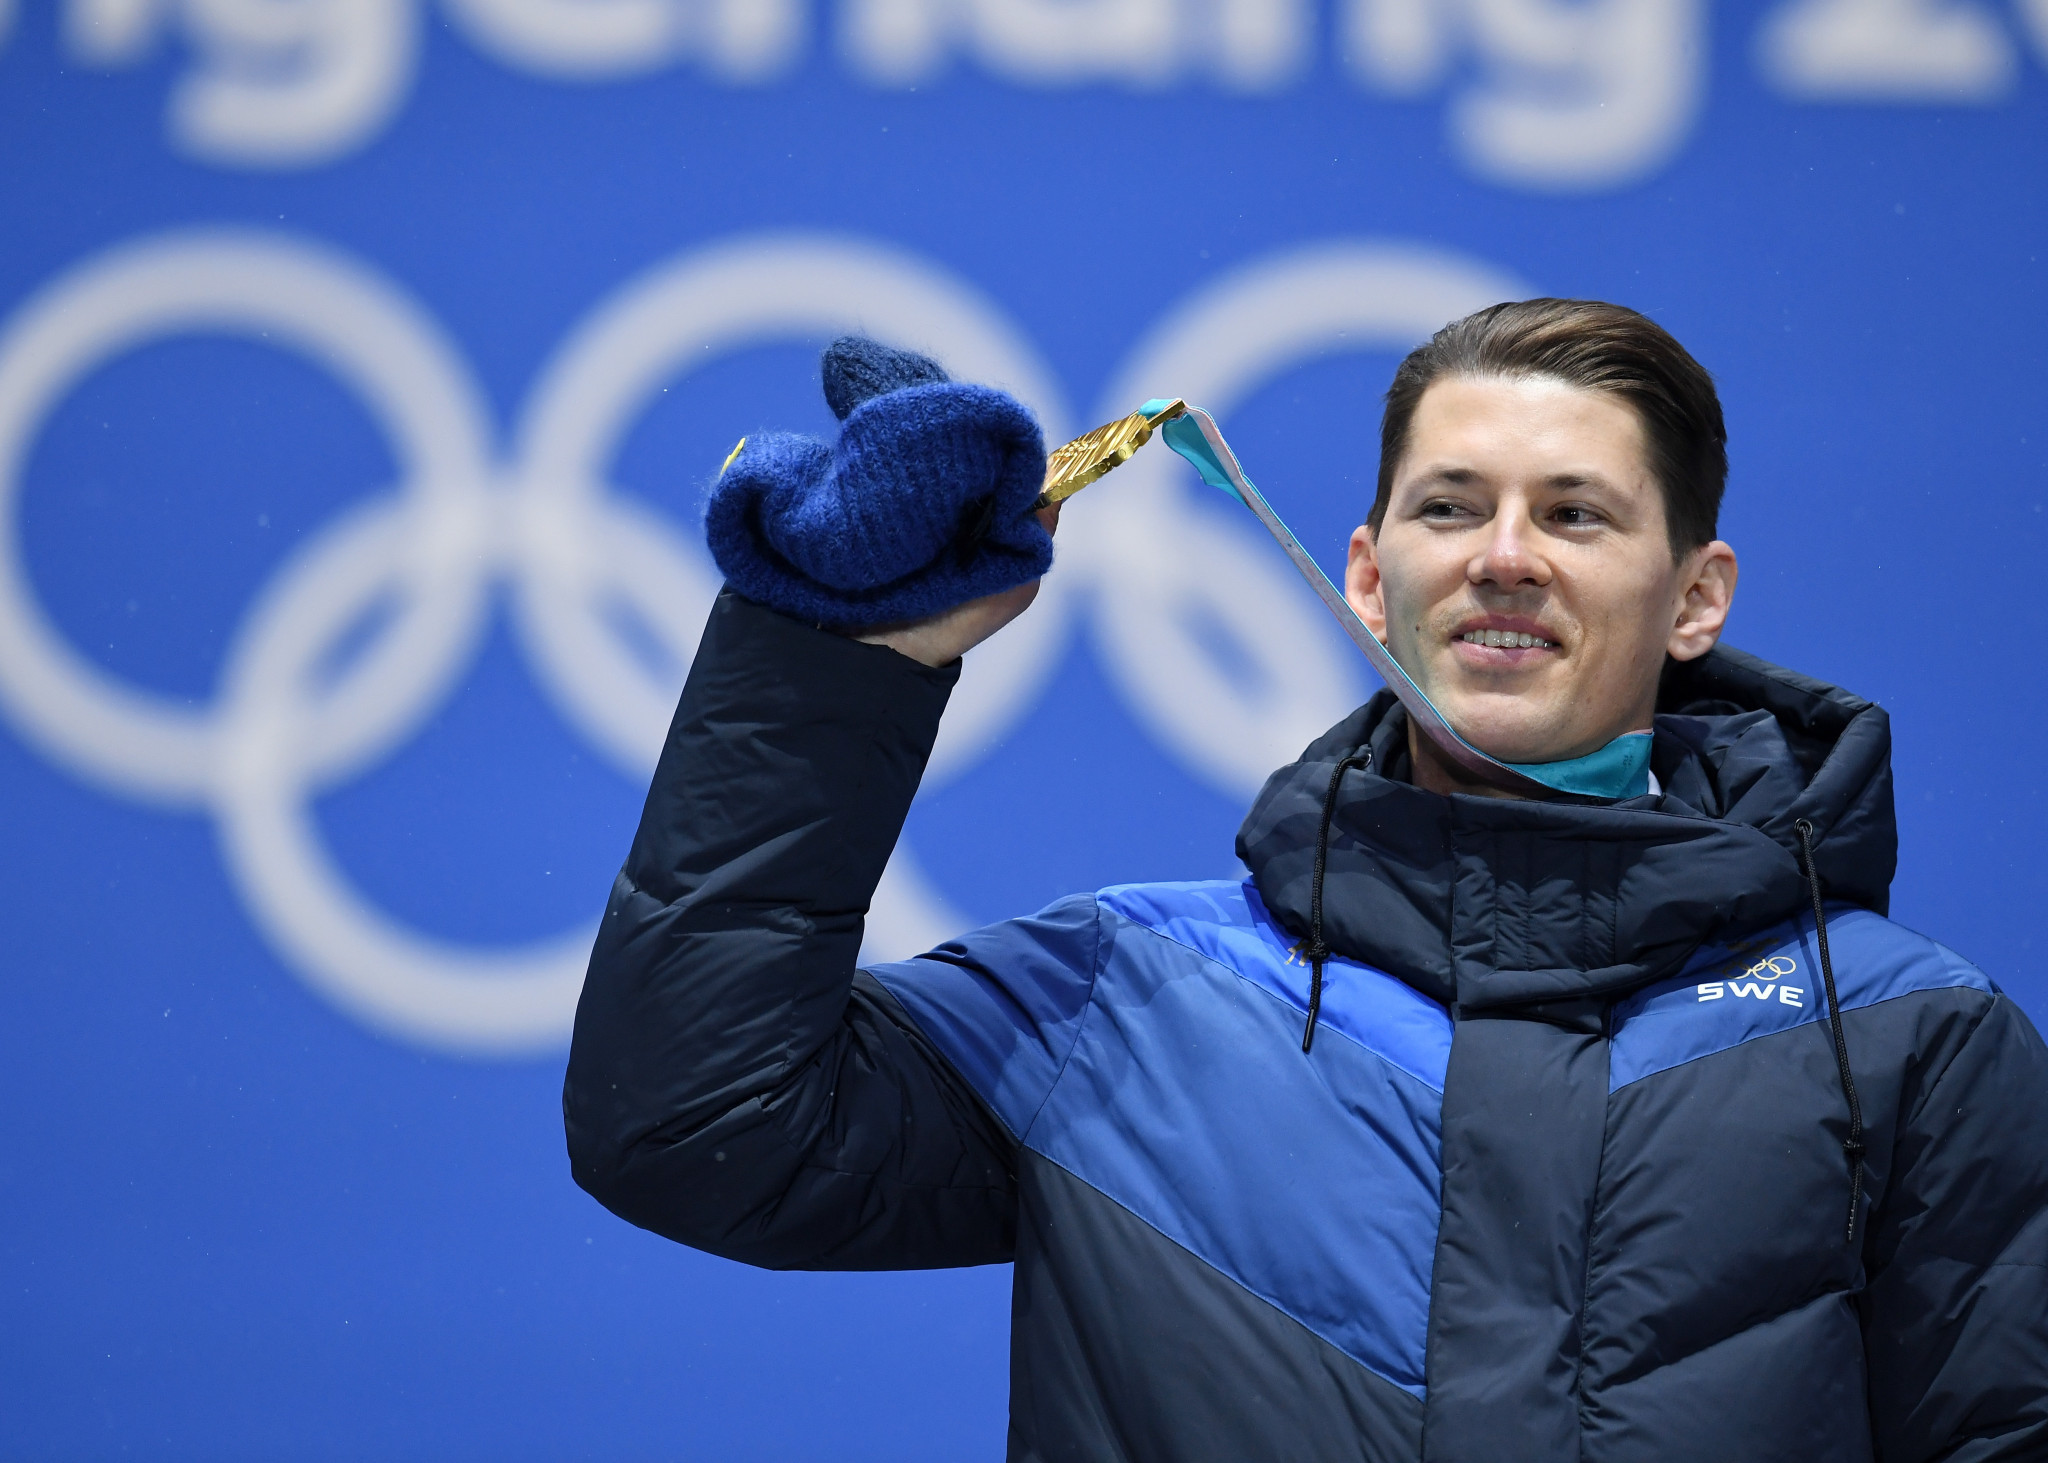 André Myhrer won men's slalom gold at Pyeongchang 2018 ©Getty Images